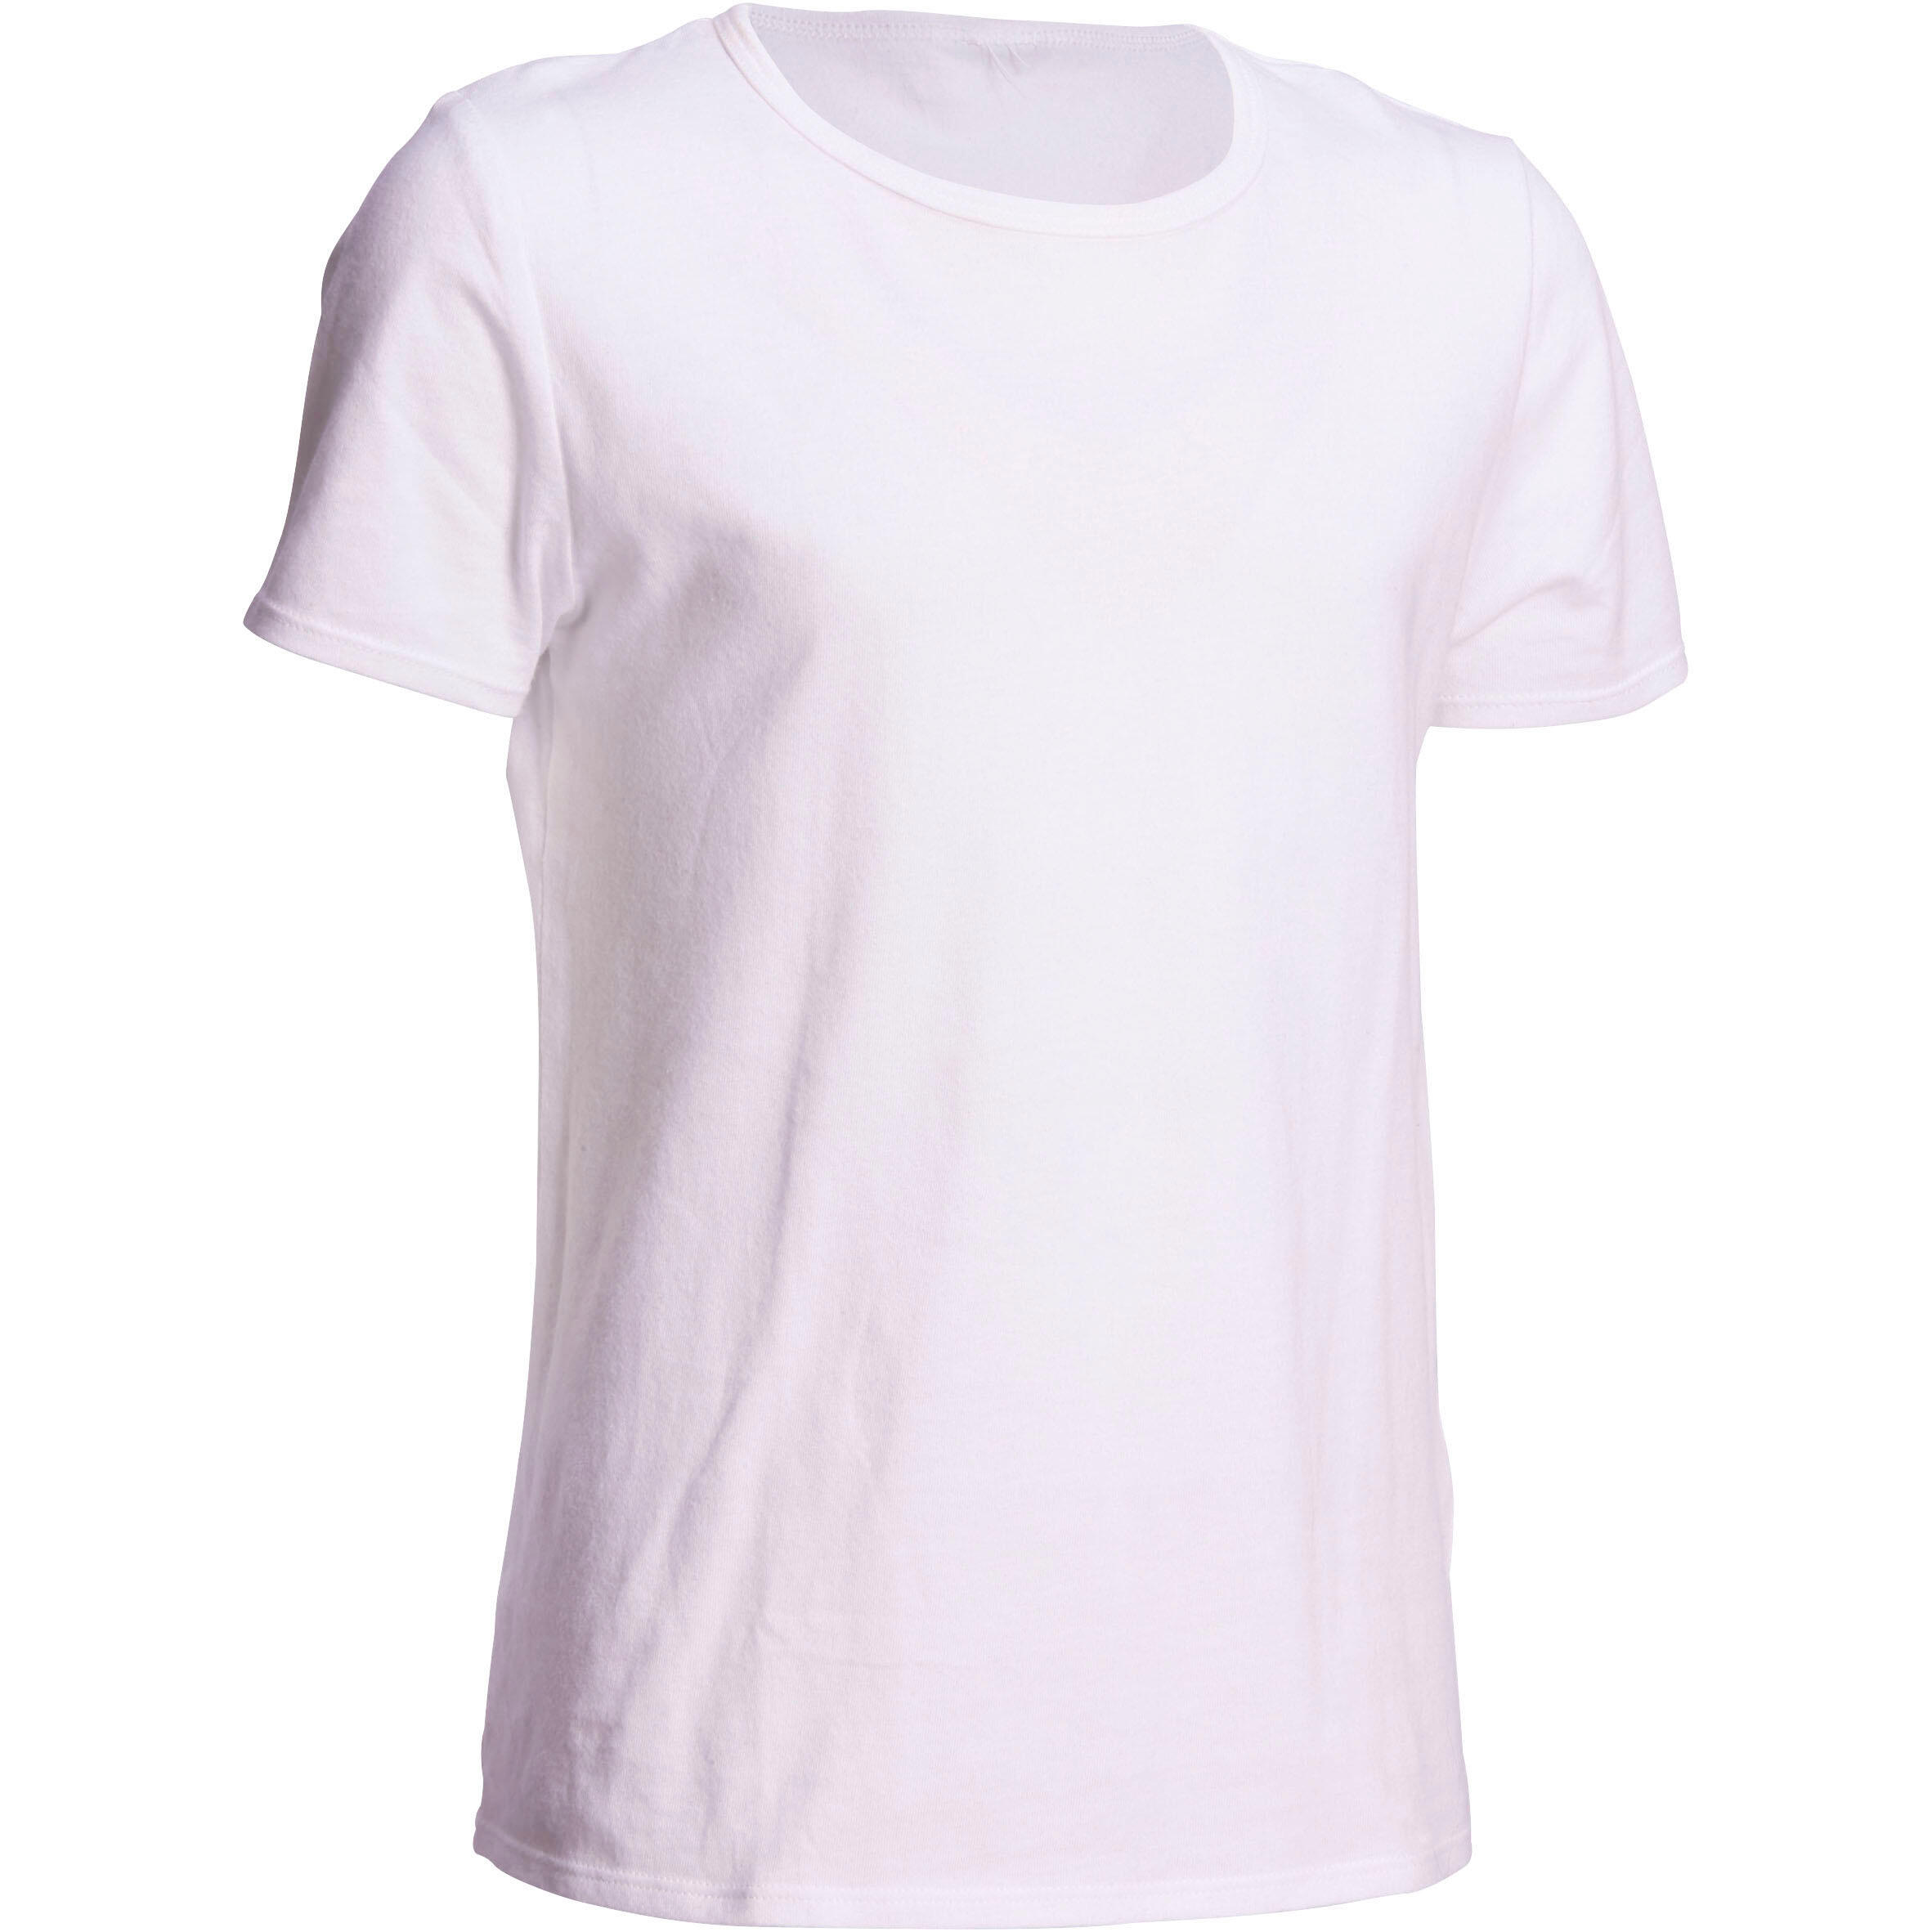 DOMYOS 100 Boys' Short-Sleeved Gym T-Shirt - White